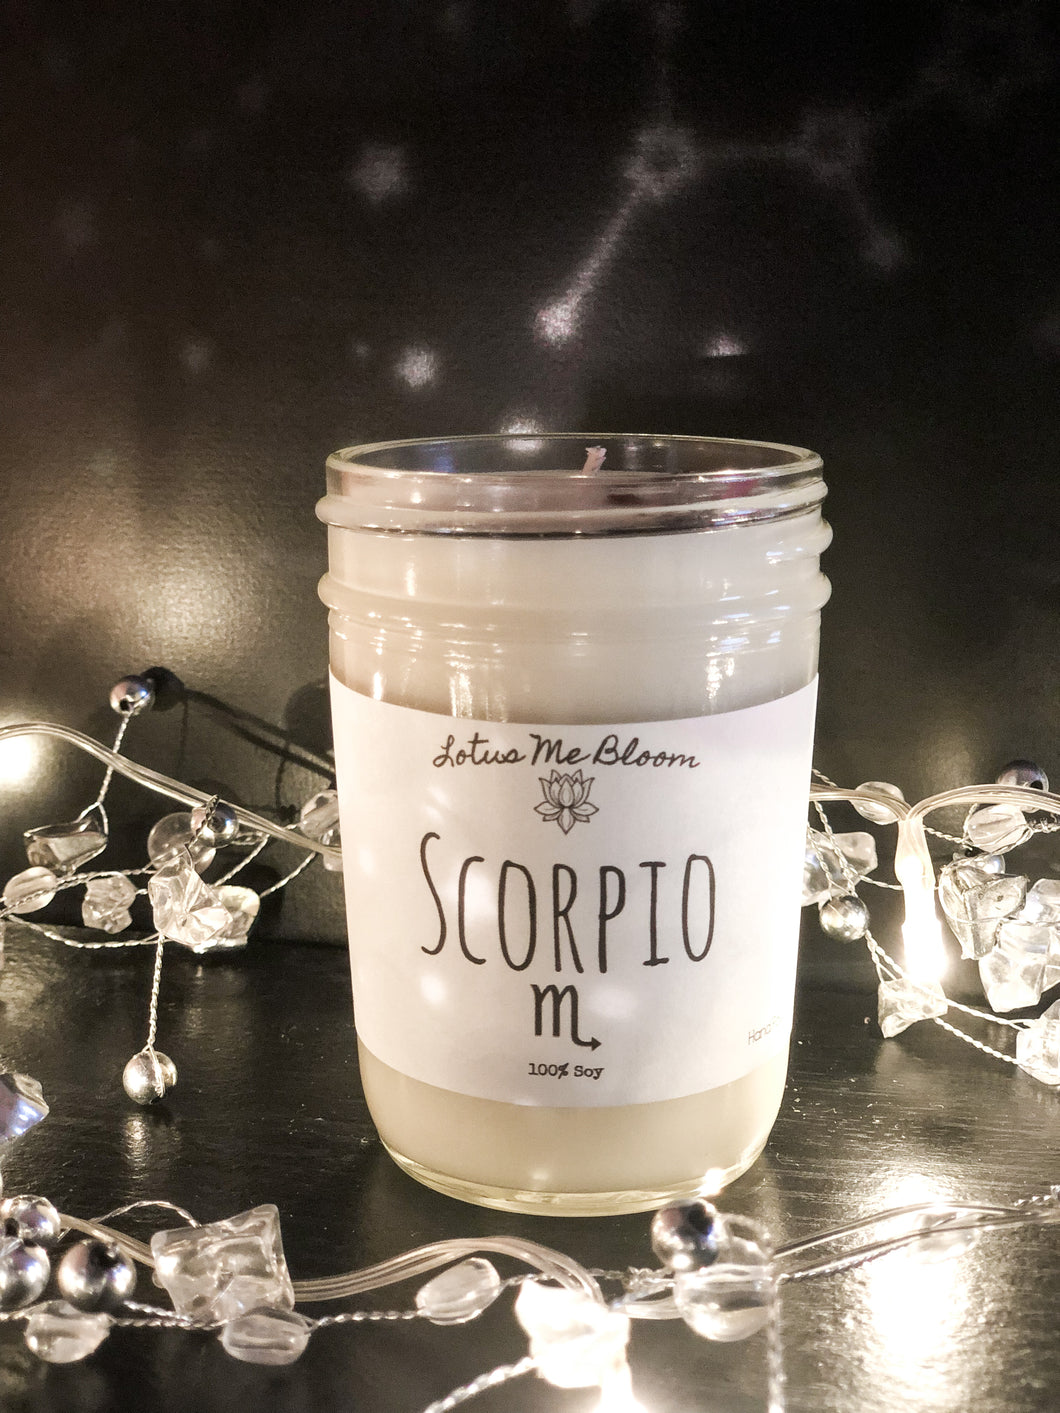 Scorpio Candles